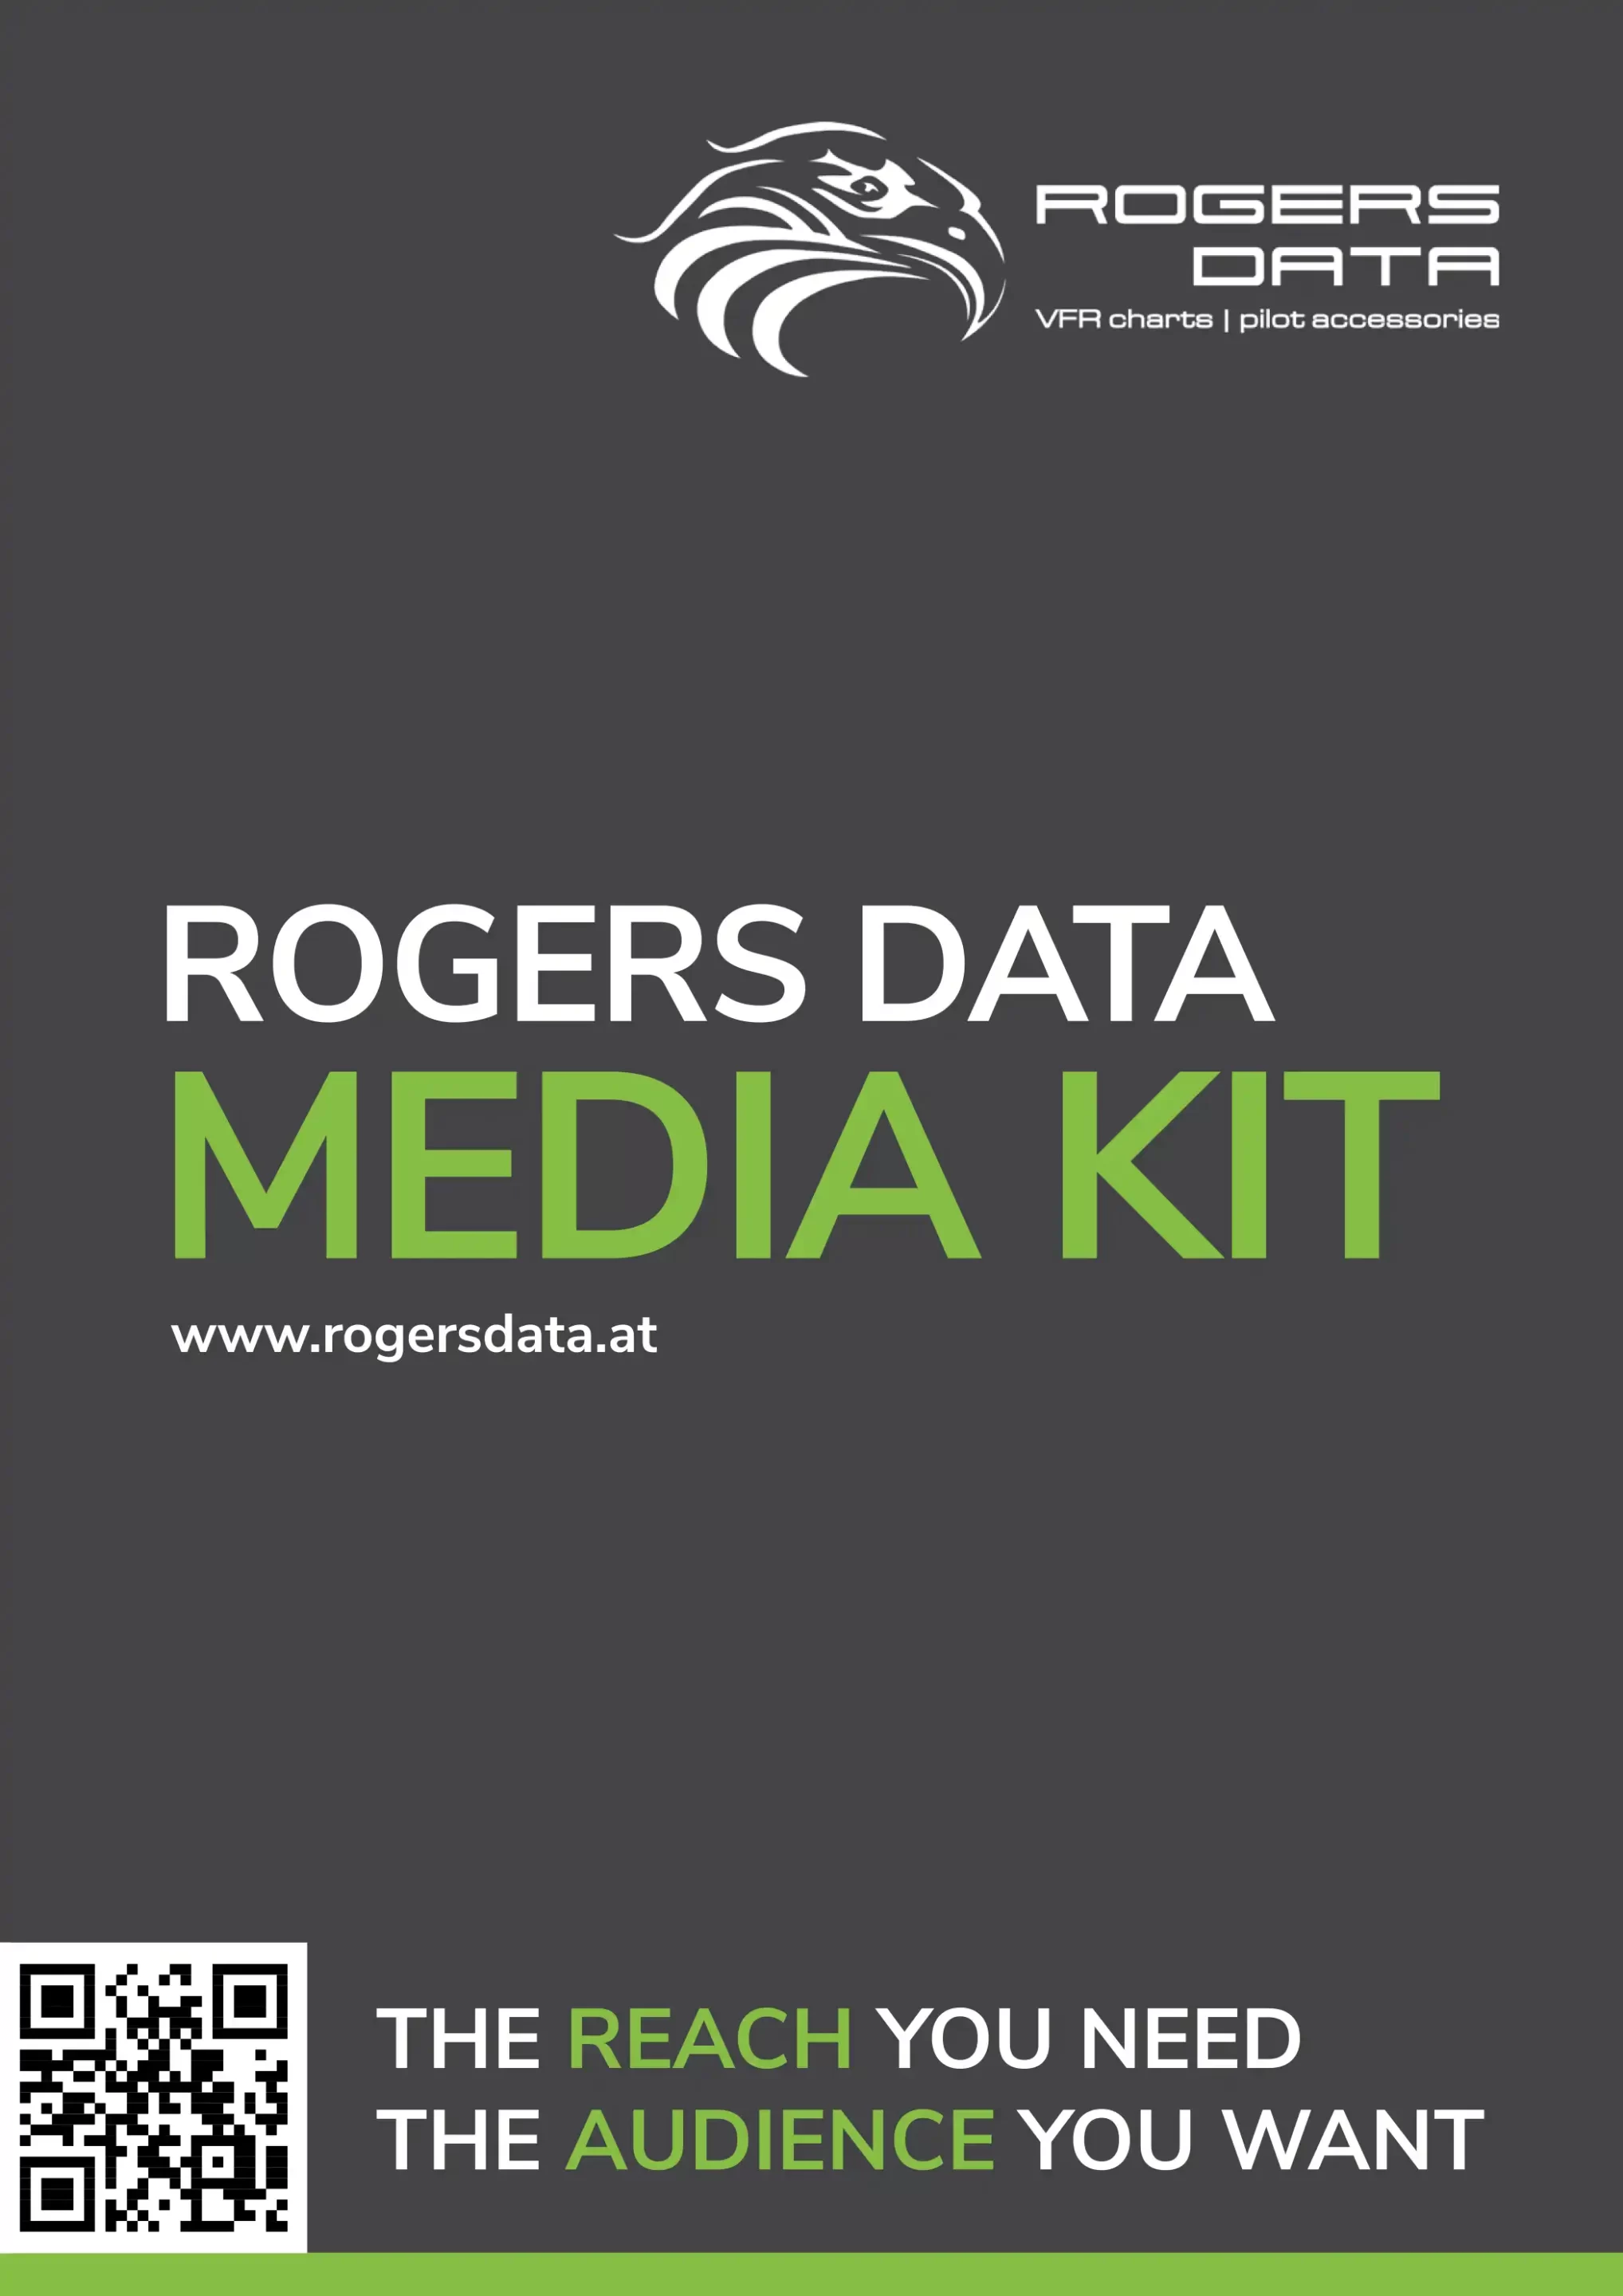 Werbung bei Rogers Data